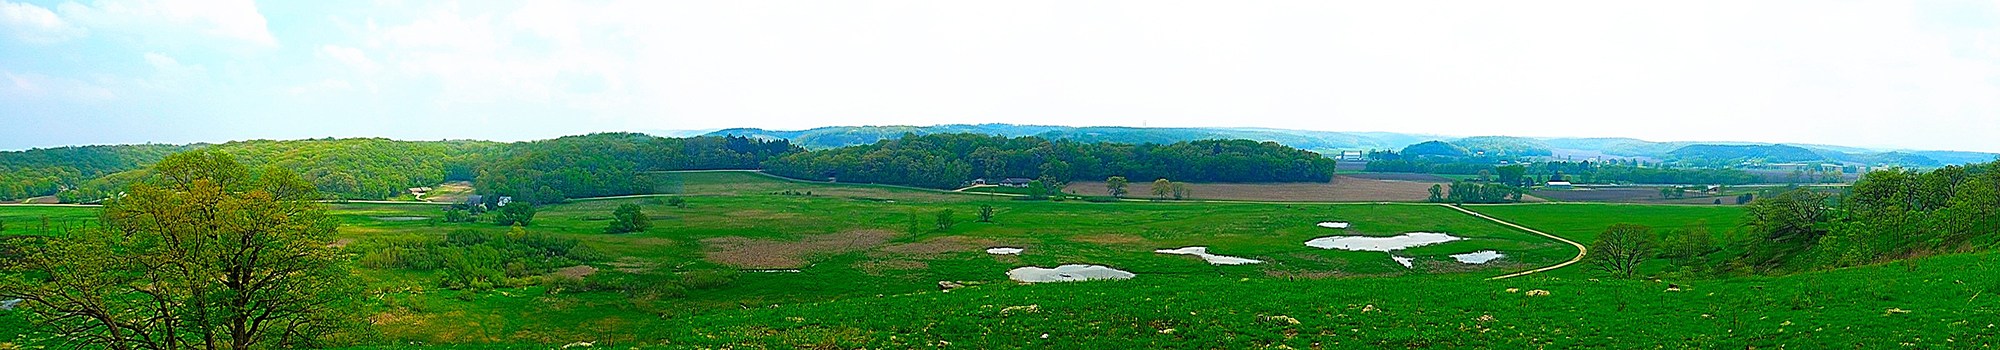 A rural farm scene in Dane County. 